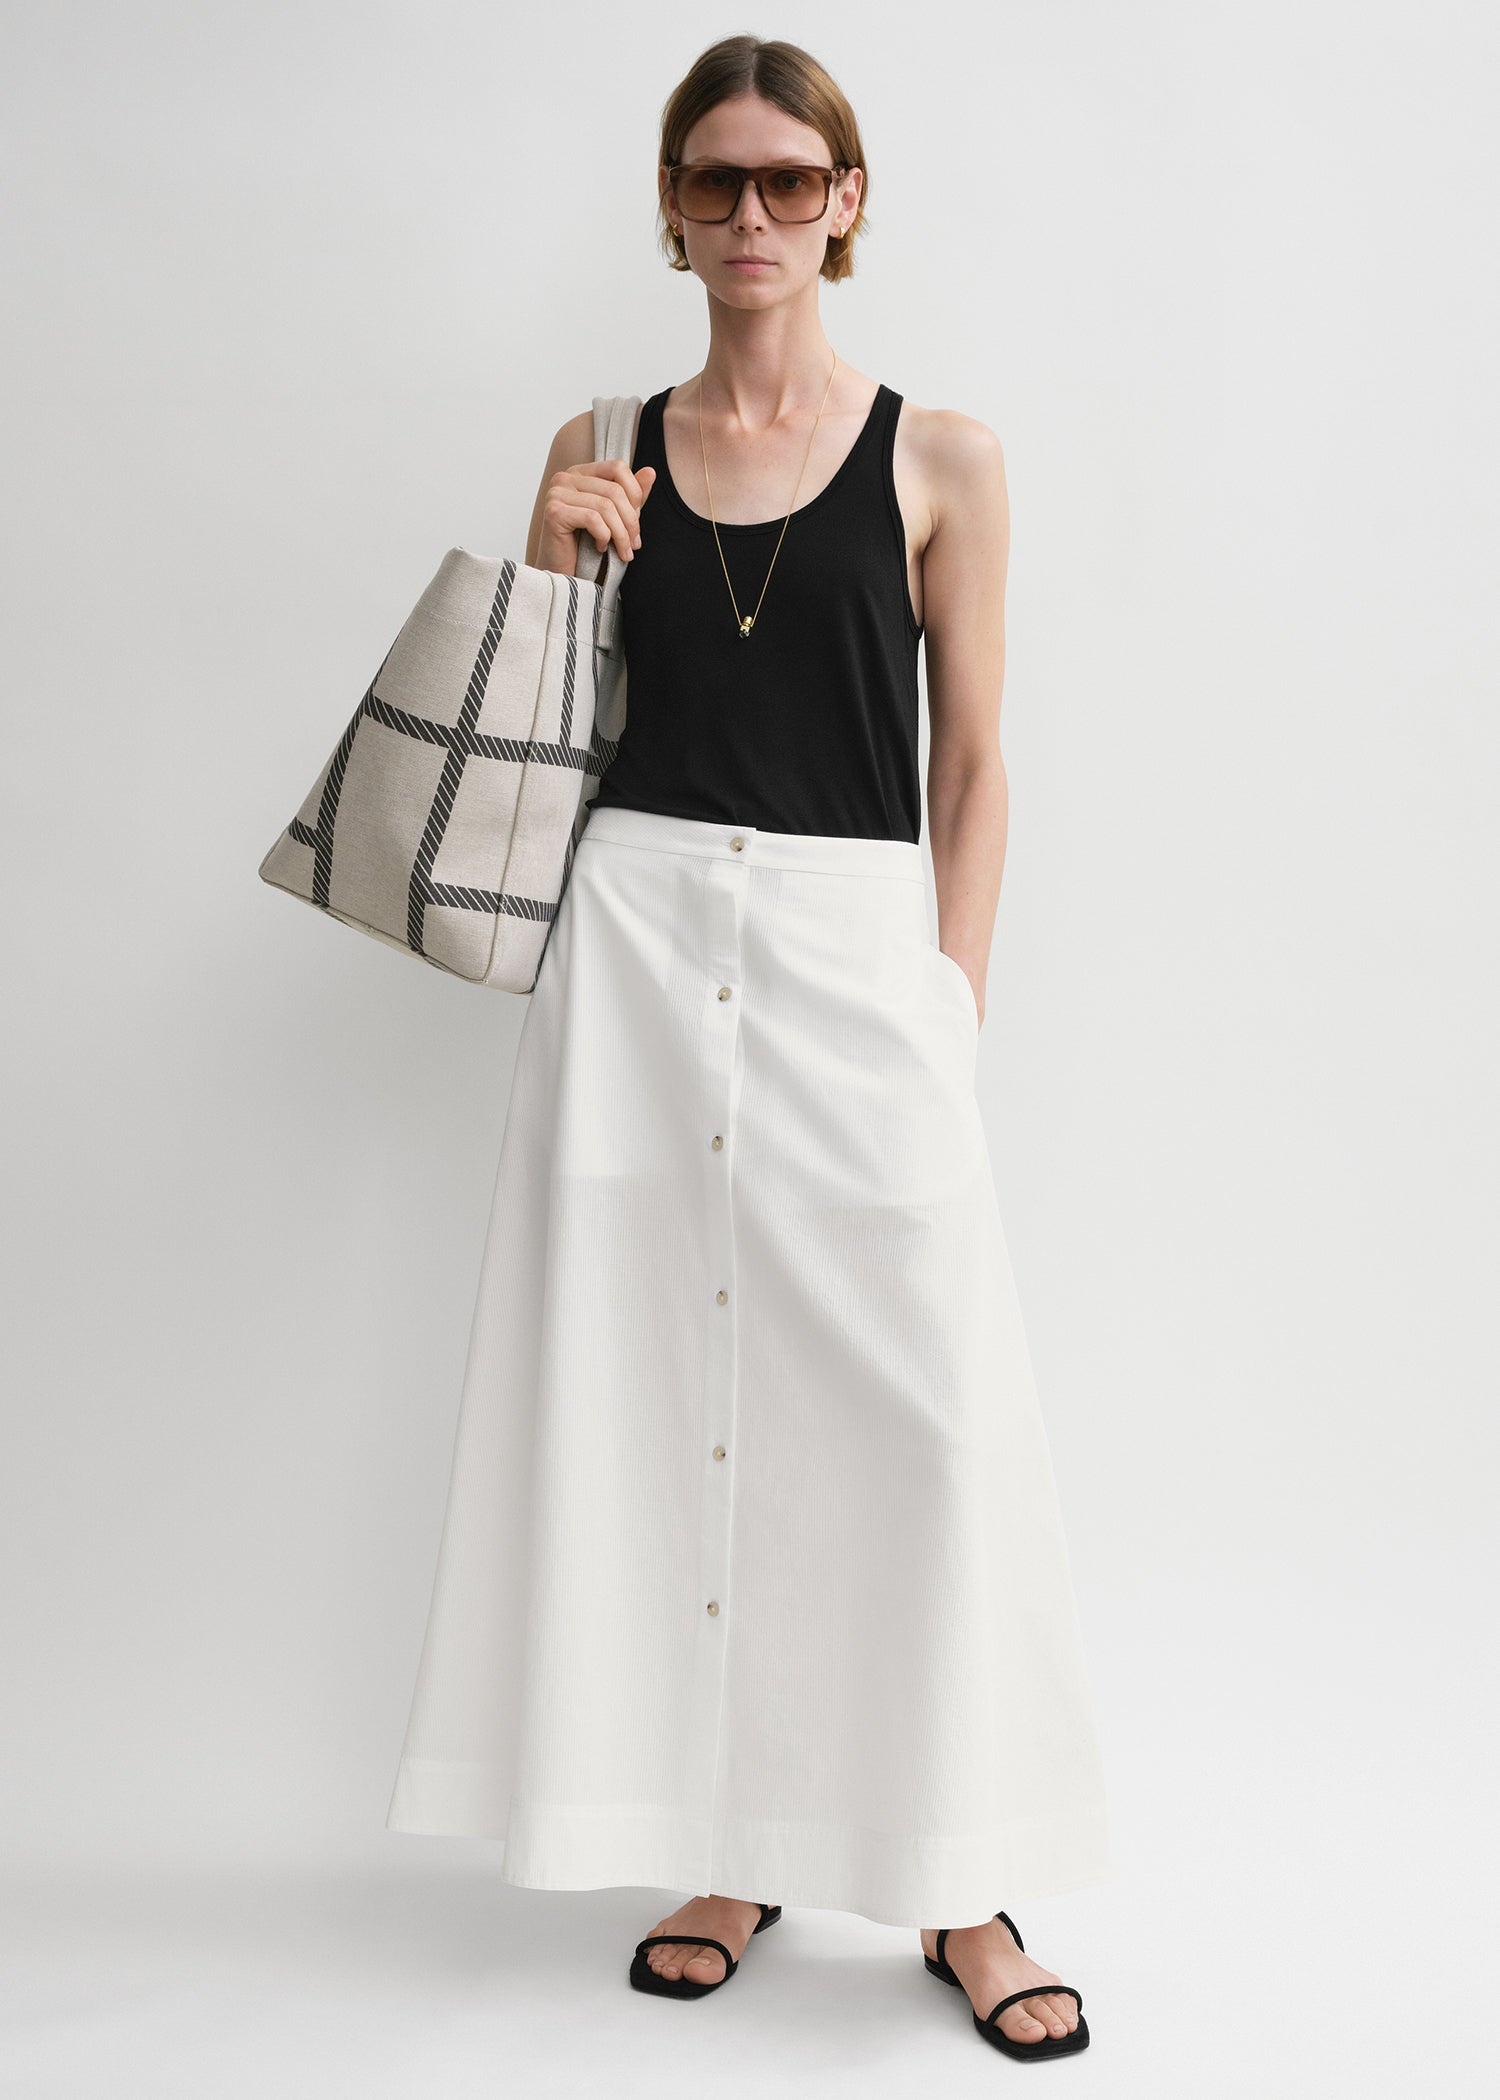 Jacquard stripe skirt white - 2